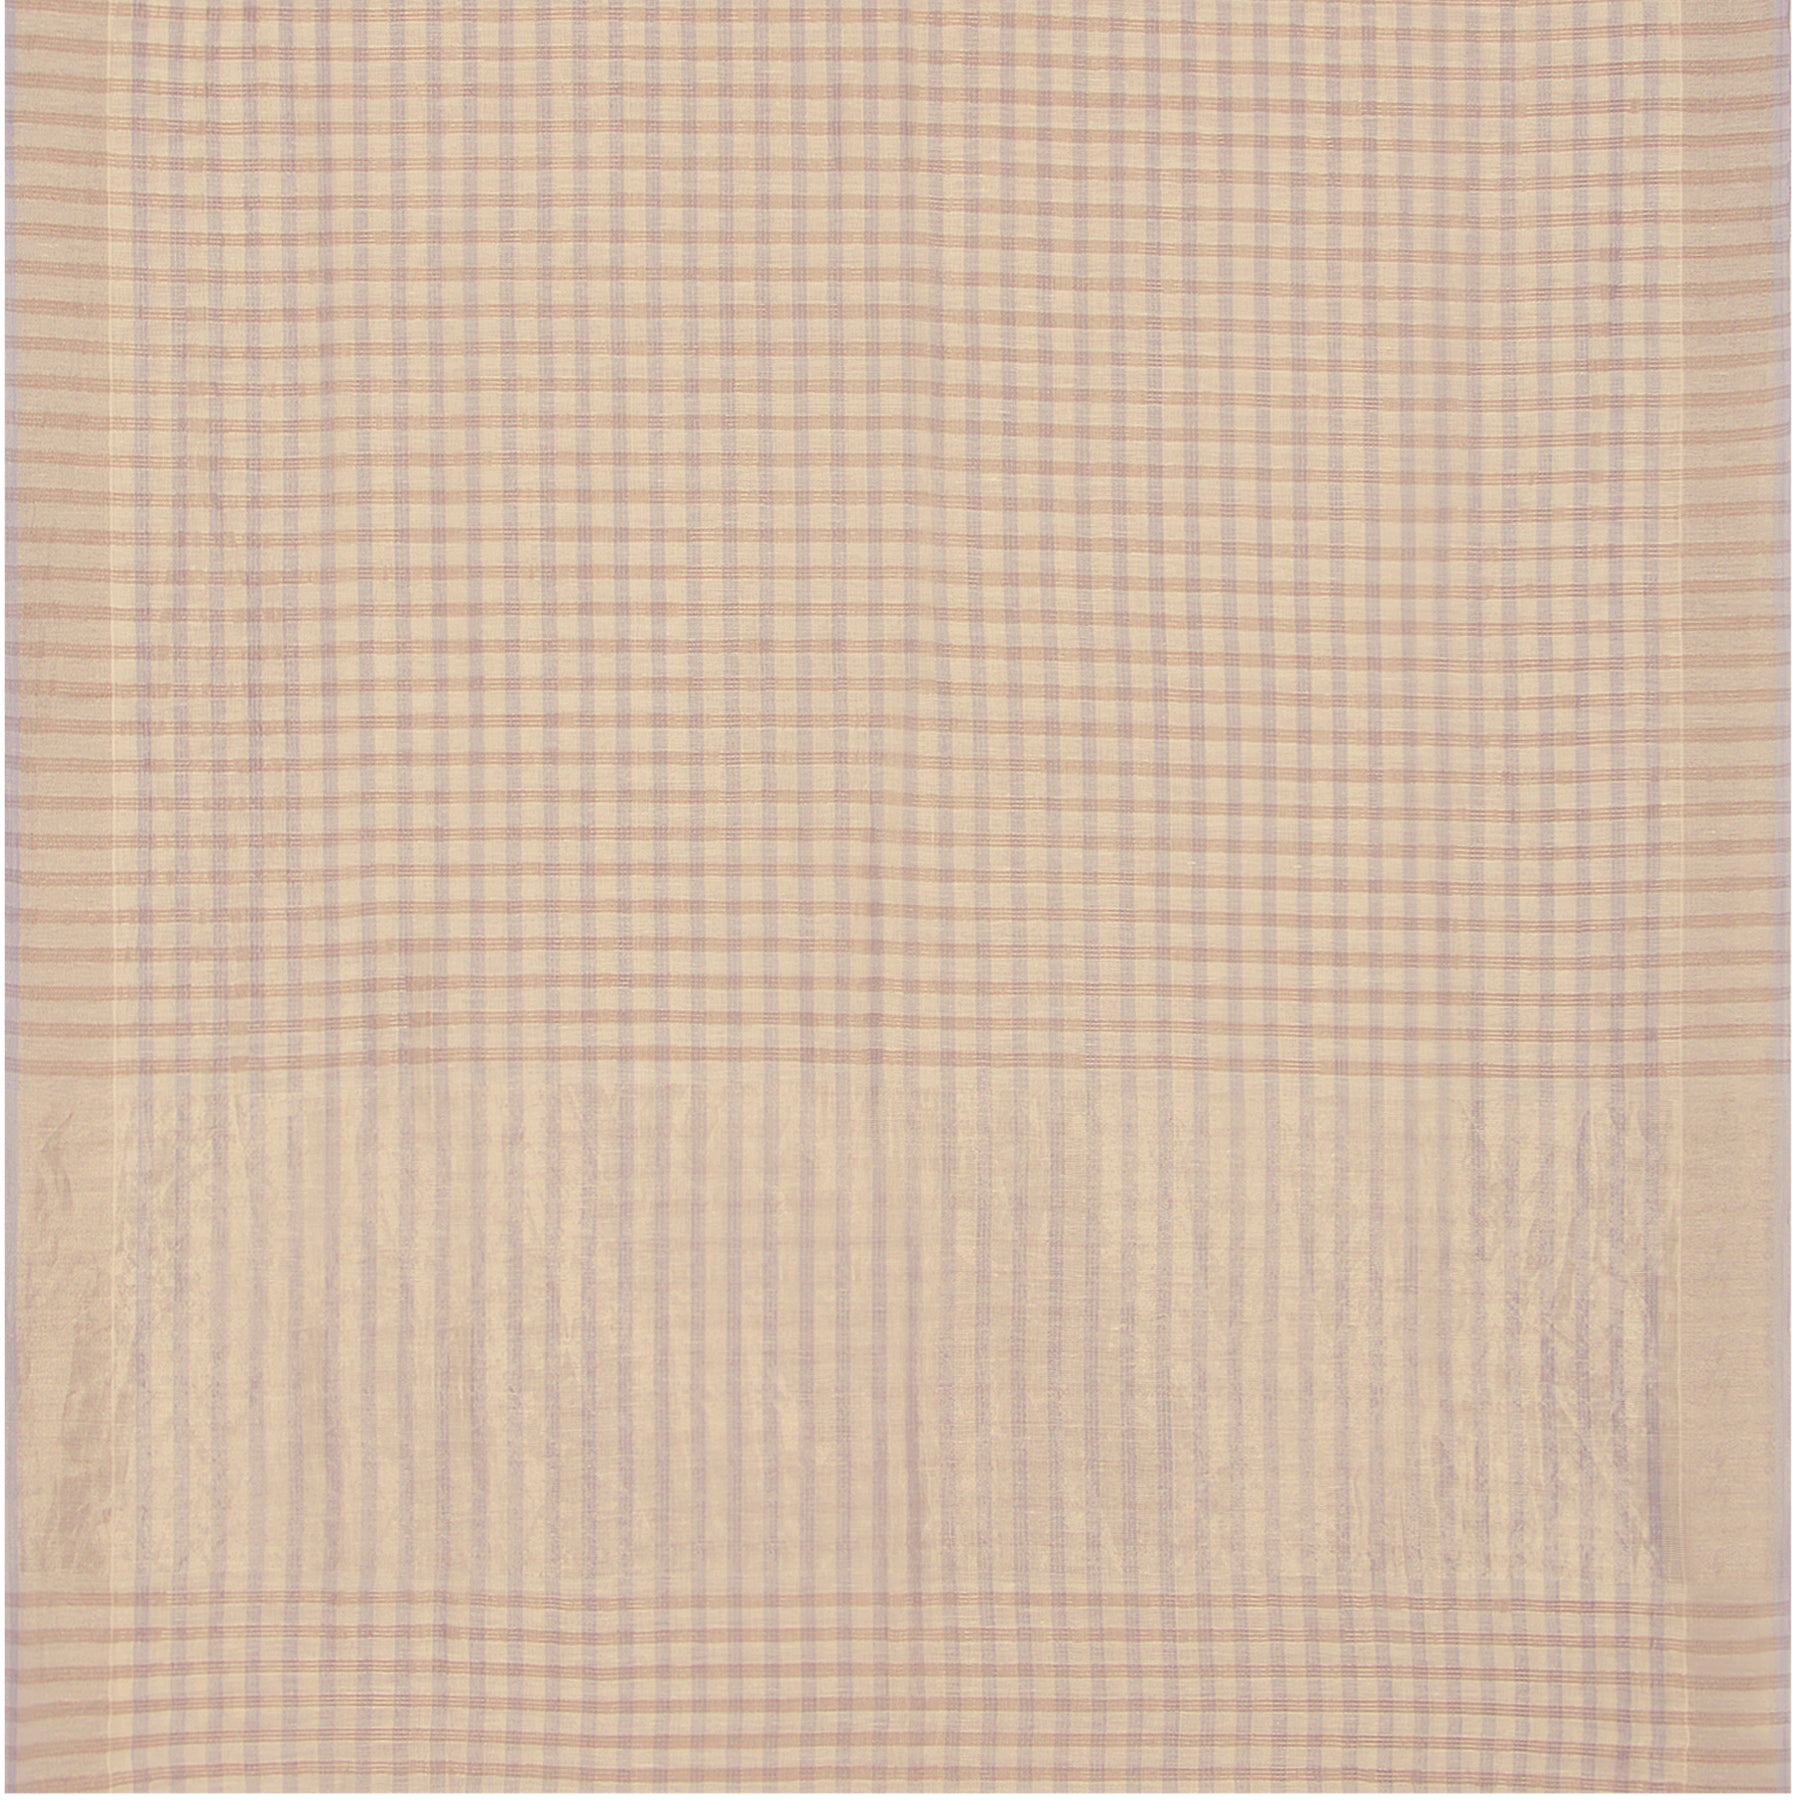 Pradeep Pillai Linen/Cotton Sari 23-008-HS004-00483 - Full View